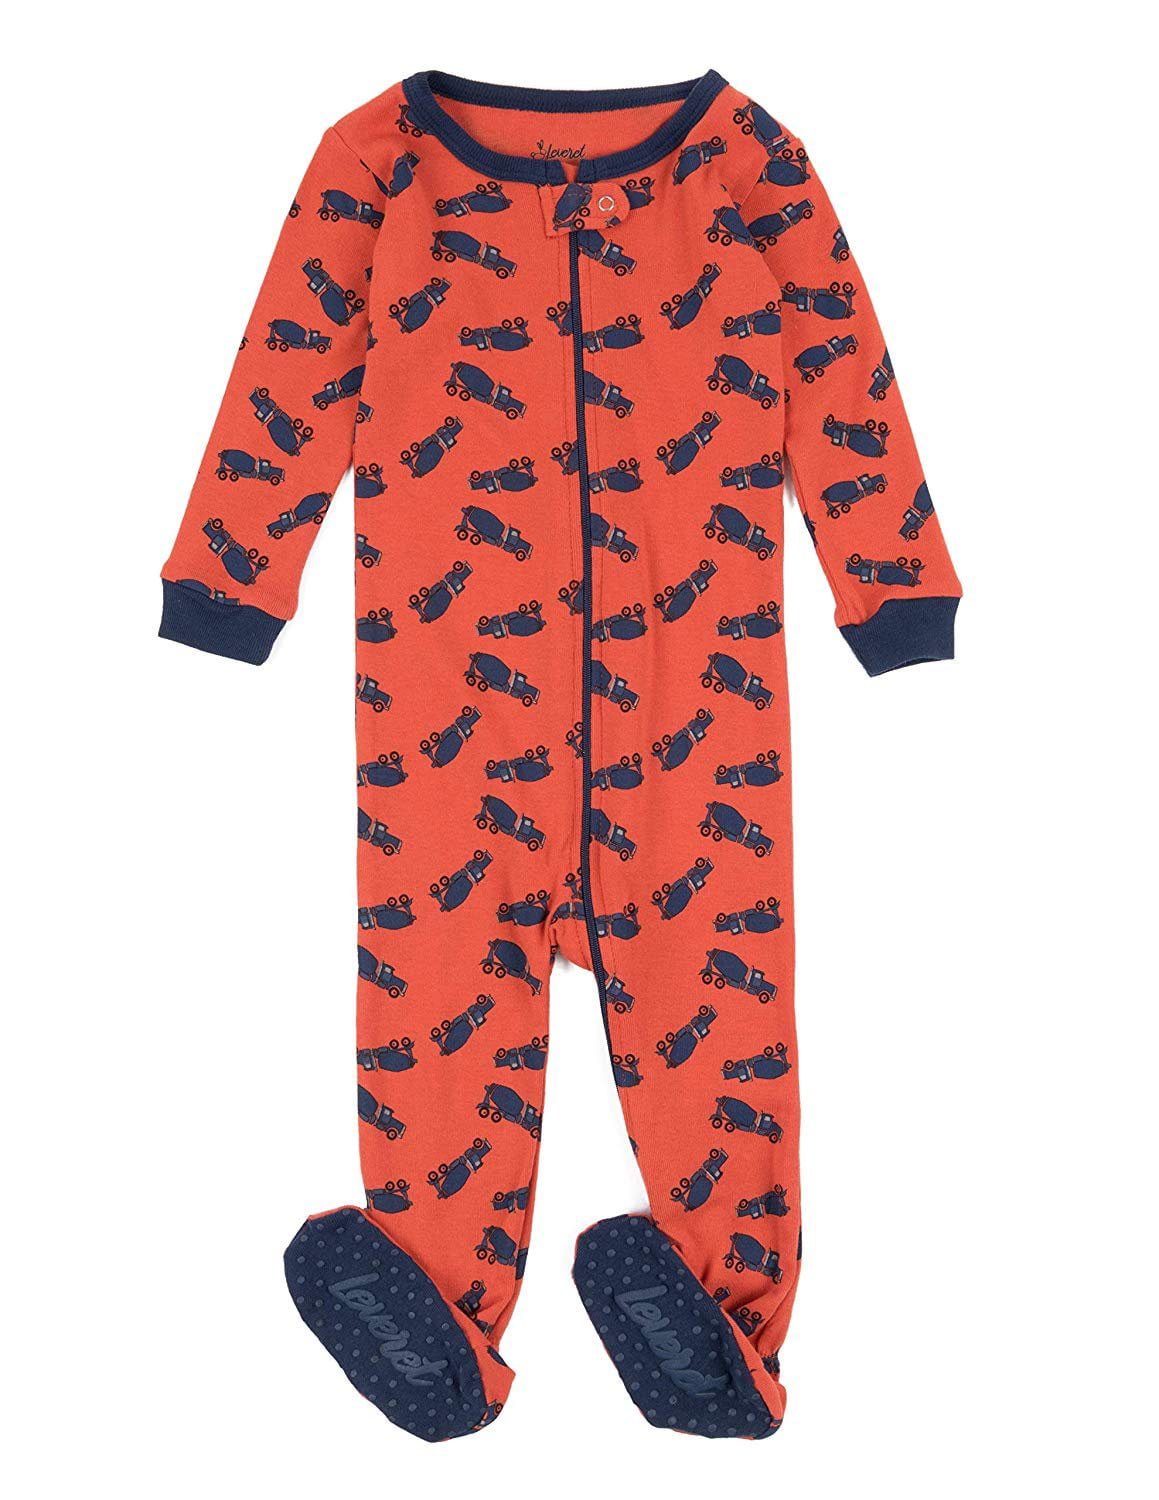 Leveret Kids Pajamas Baby Boys Girls Footed Pajamas Sleeper 100% Cotton Size 